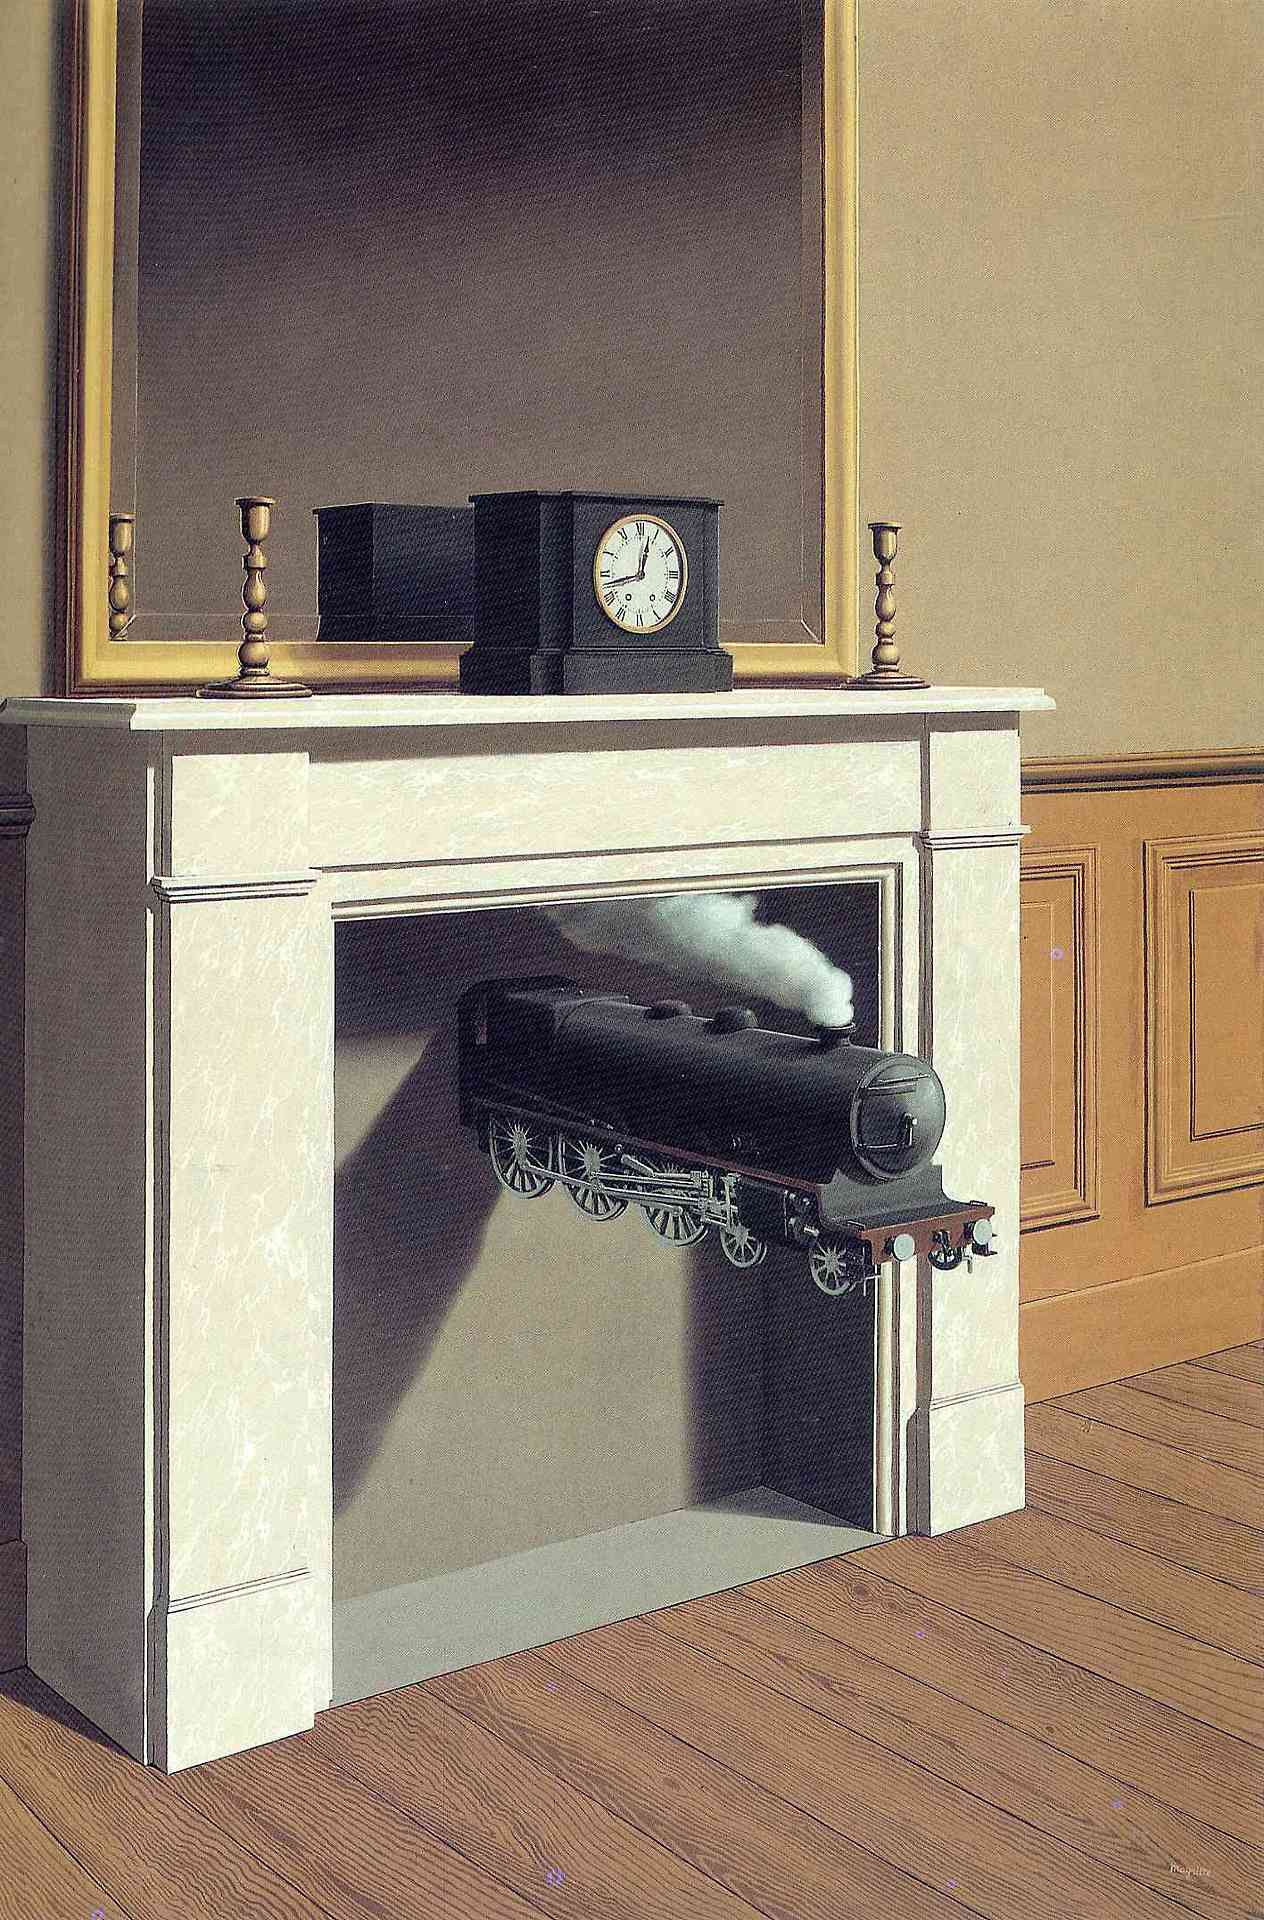 Time transfixed - Rene Magritte.jpg